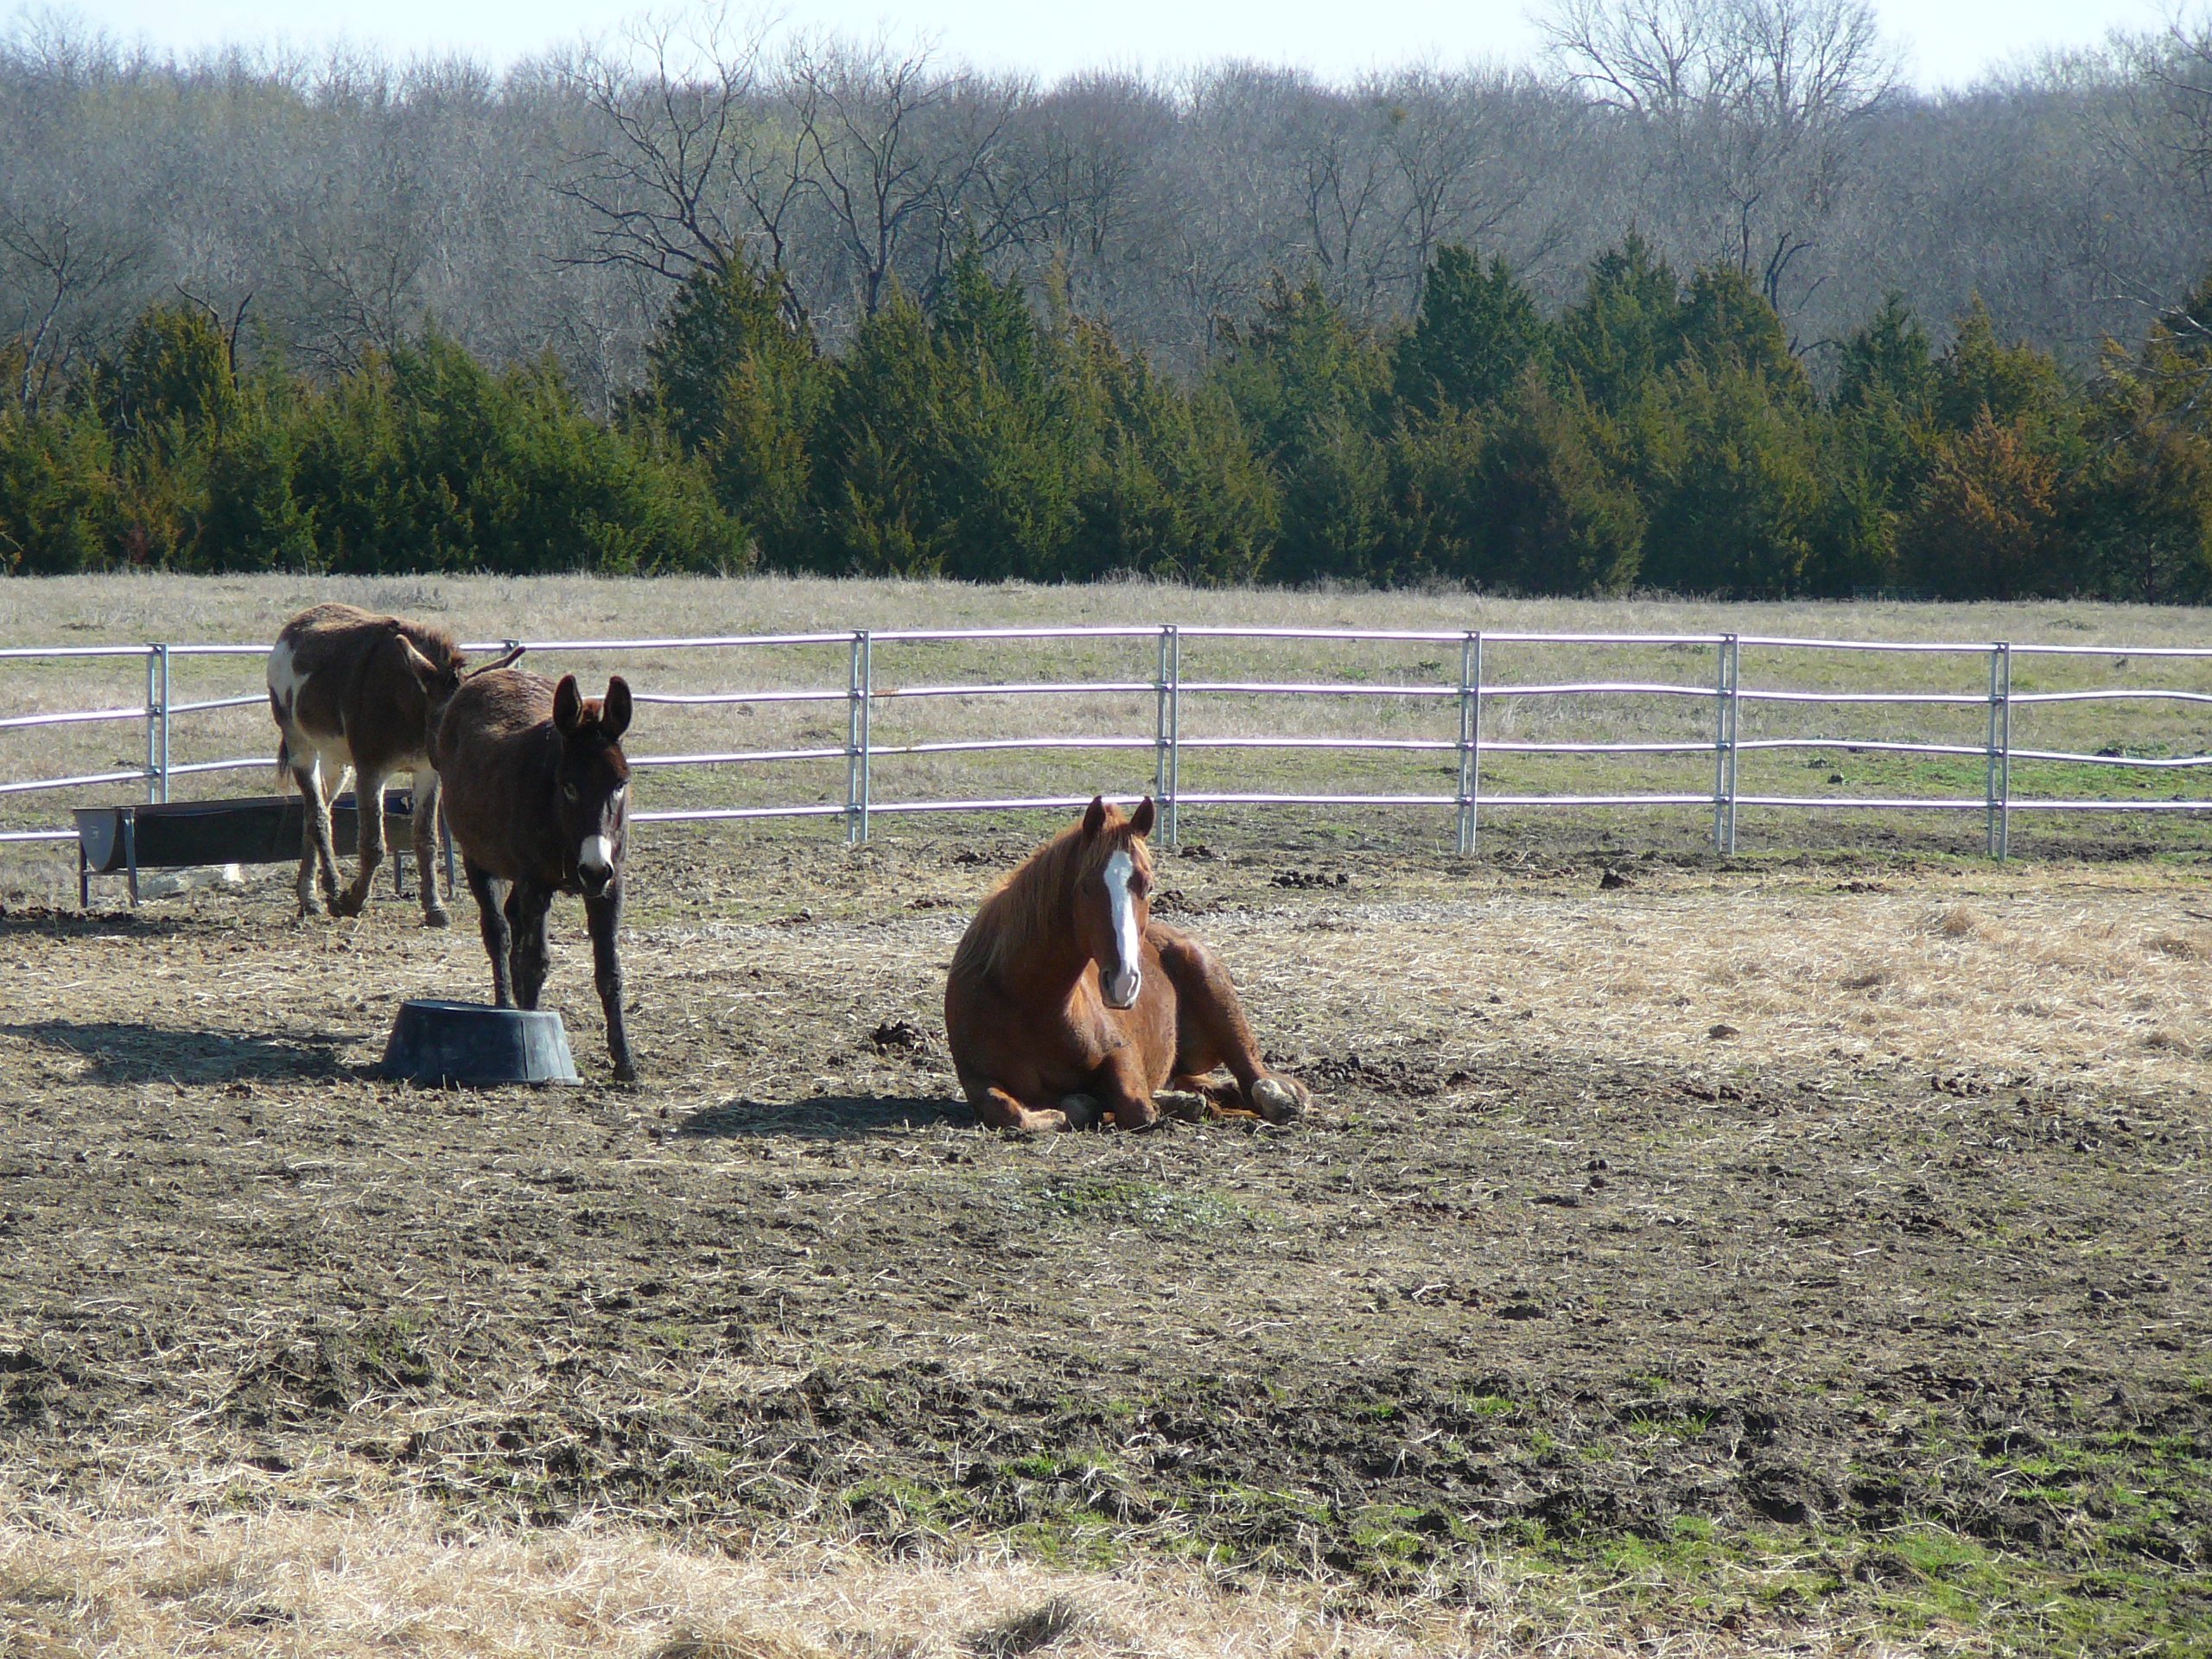 Horses sleeping in the sunshine.